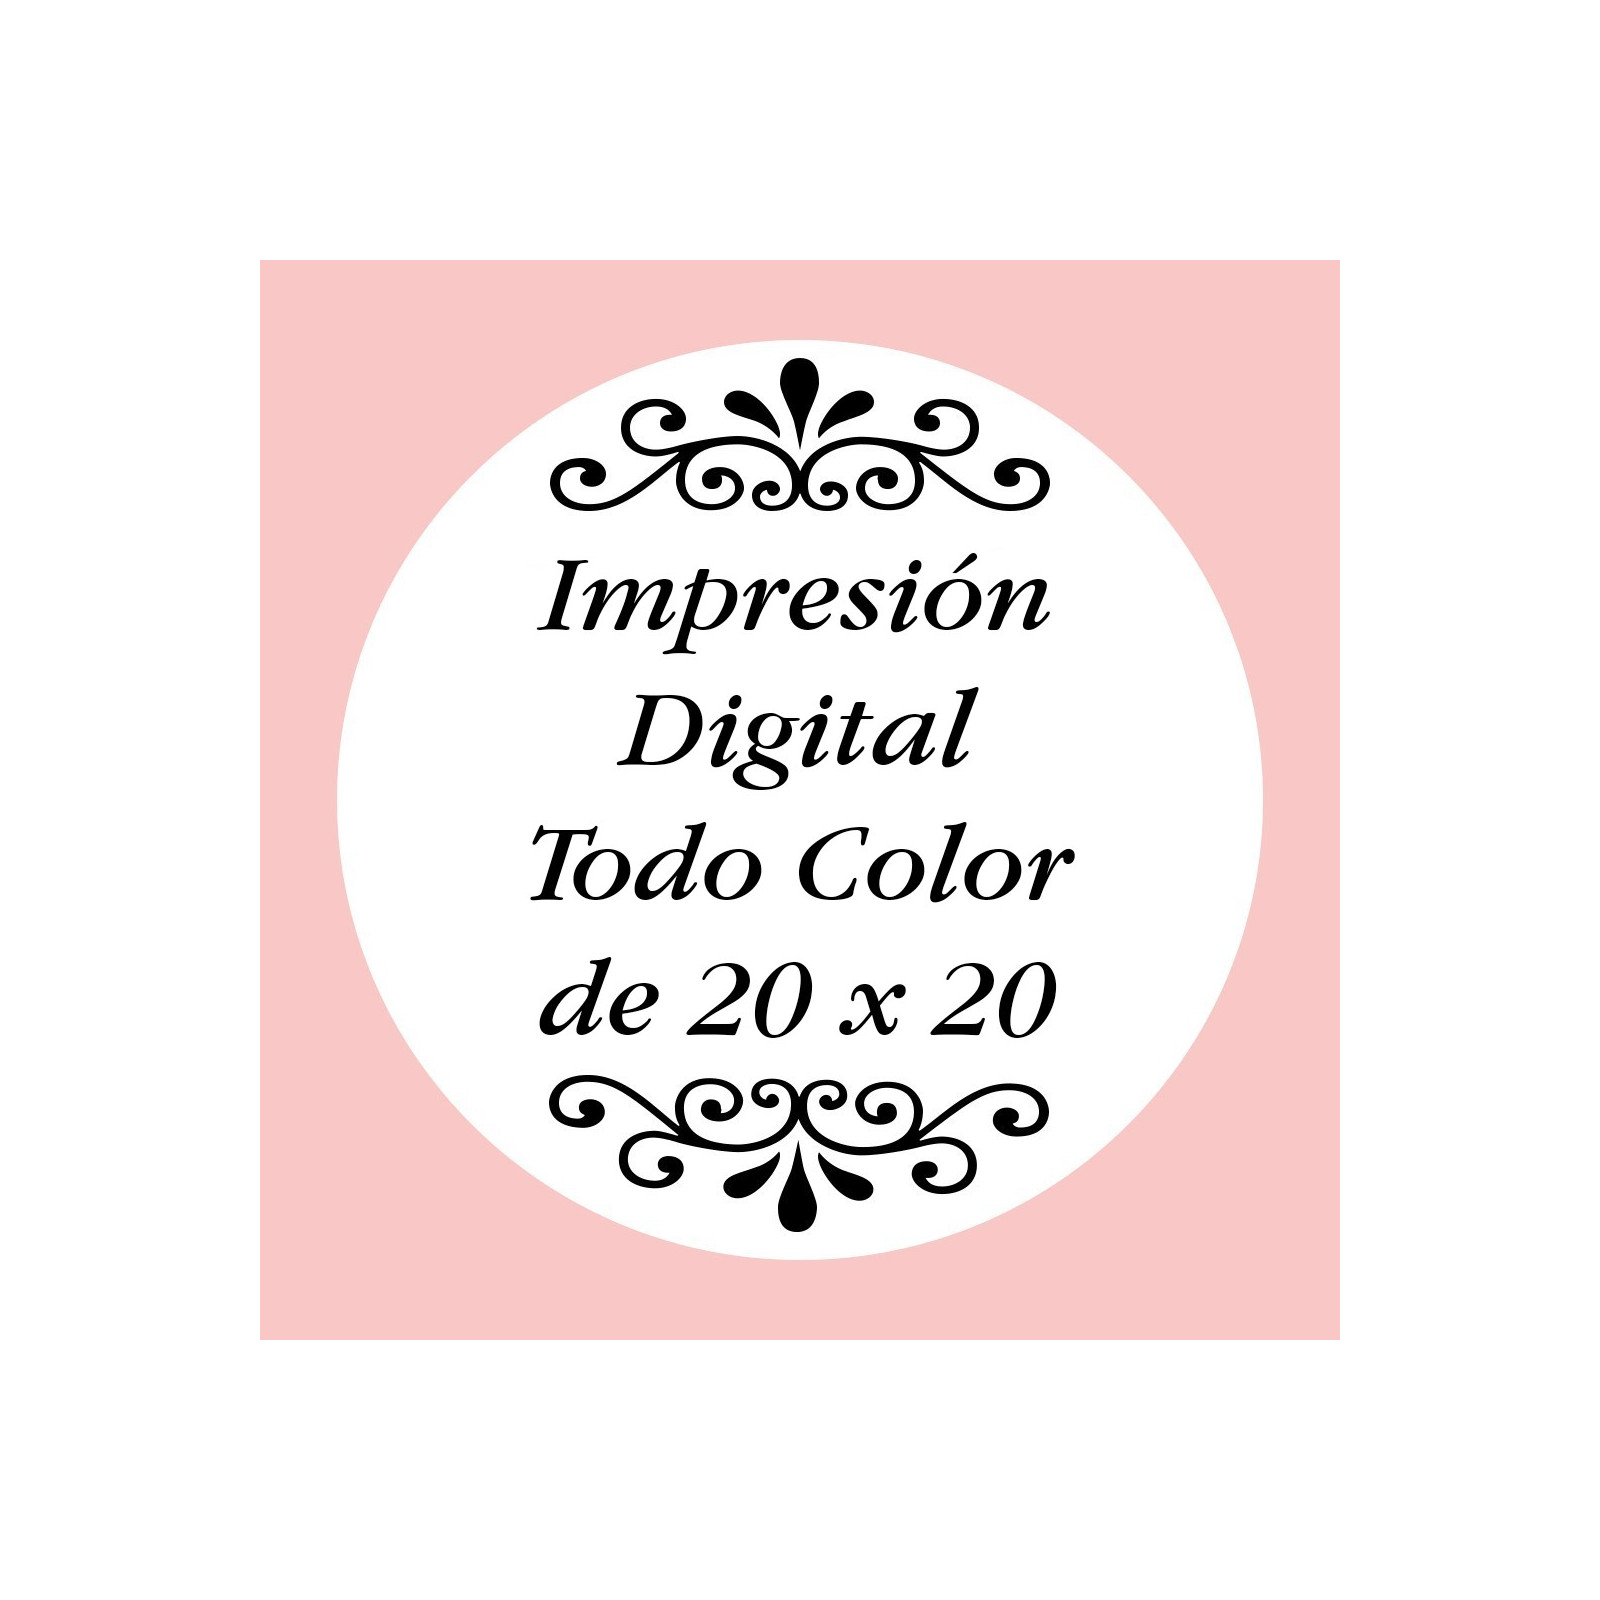 Personalización con impresión digital con texto foto o logo a todo color de 20 x 20 cm